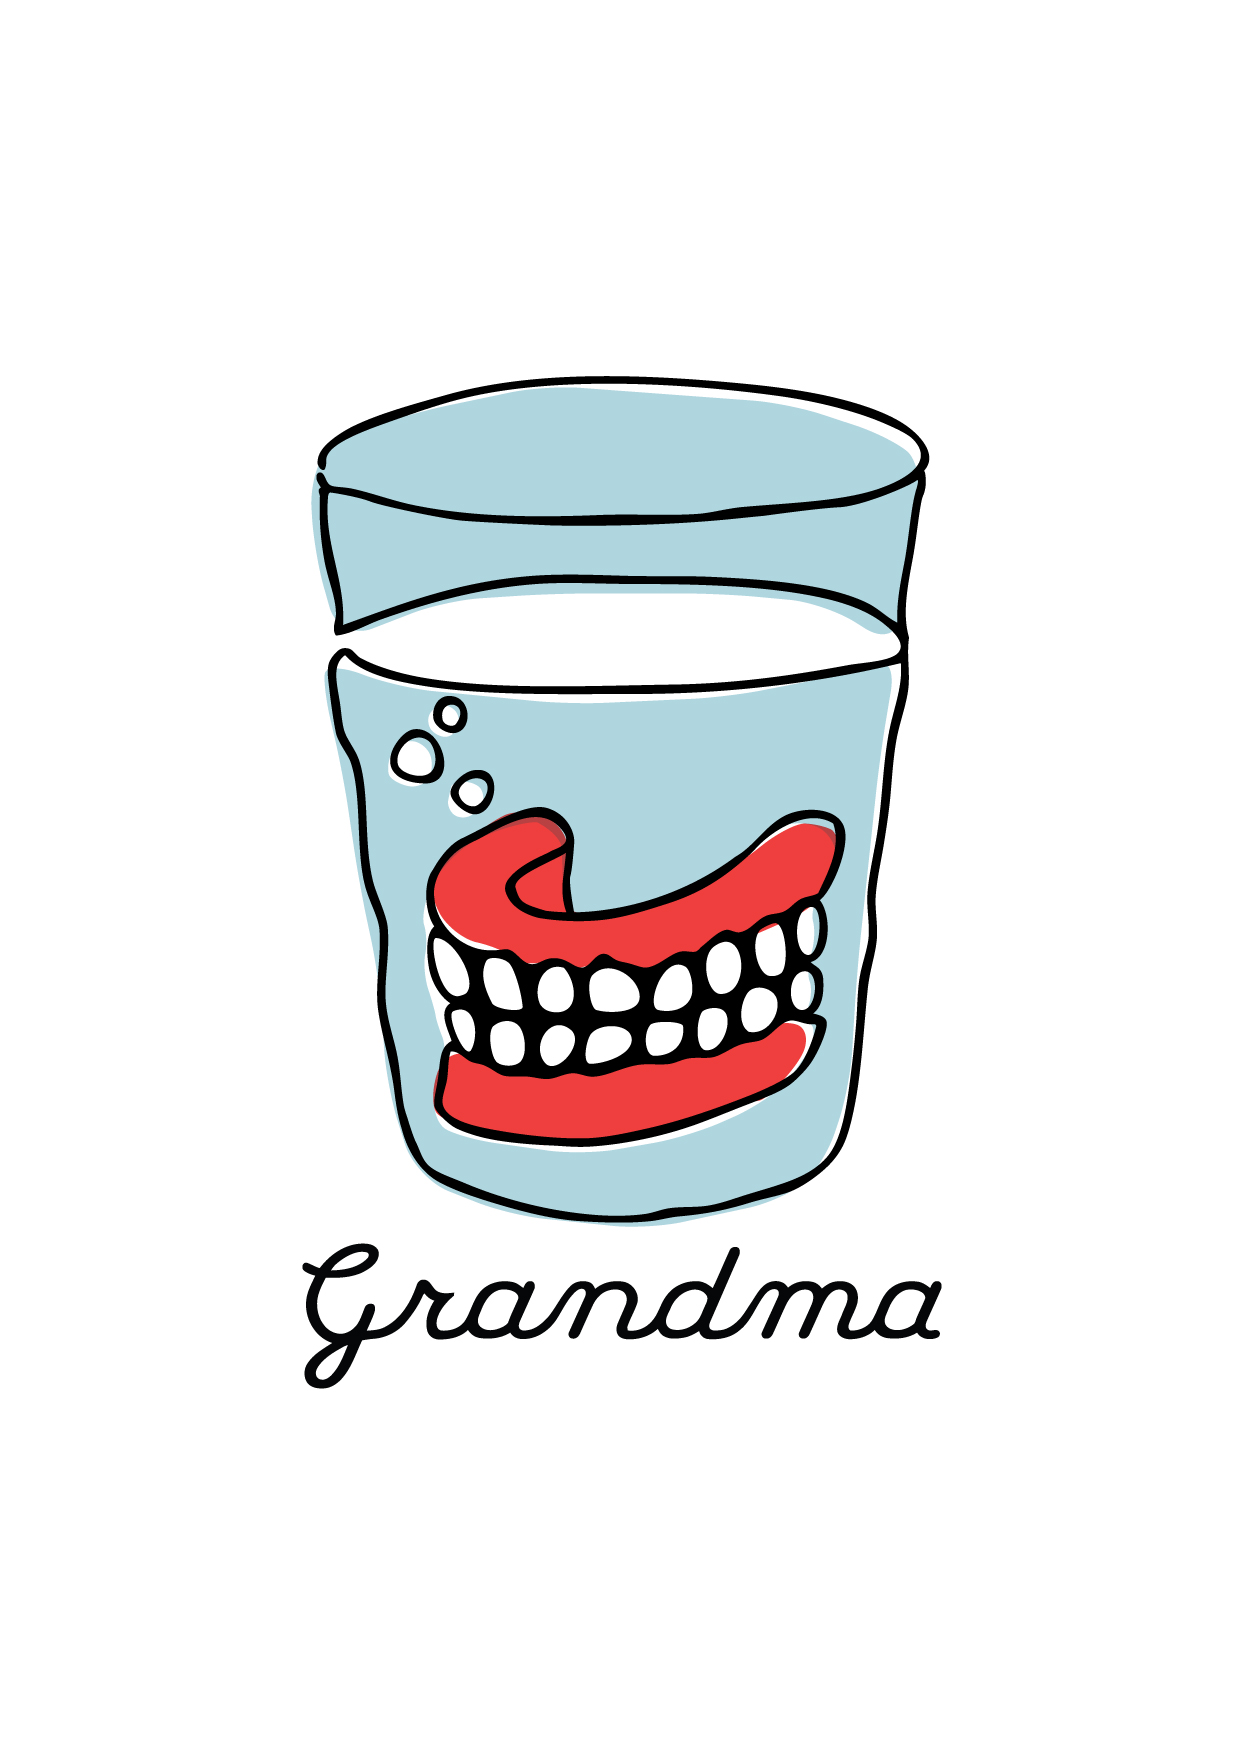 Icone de Grandma Production House 